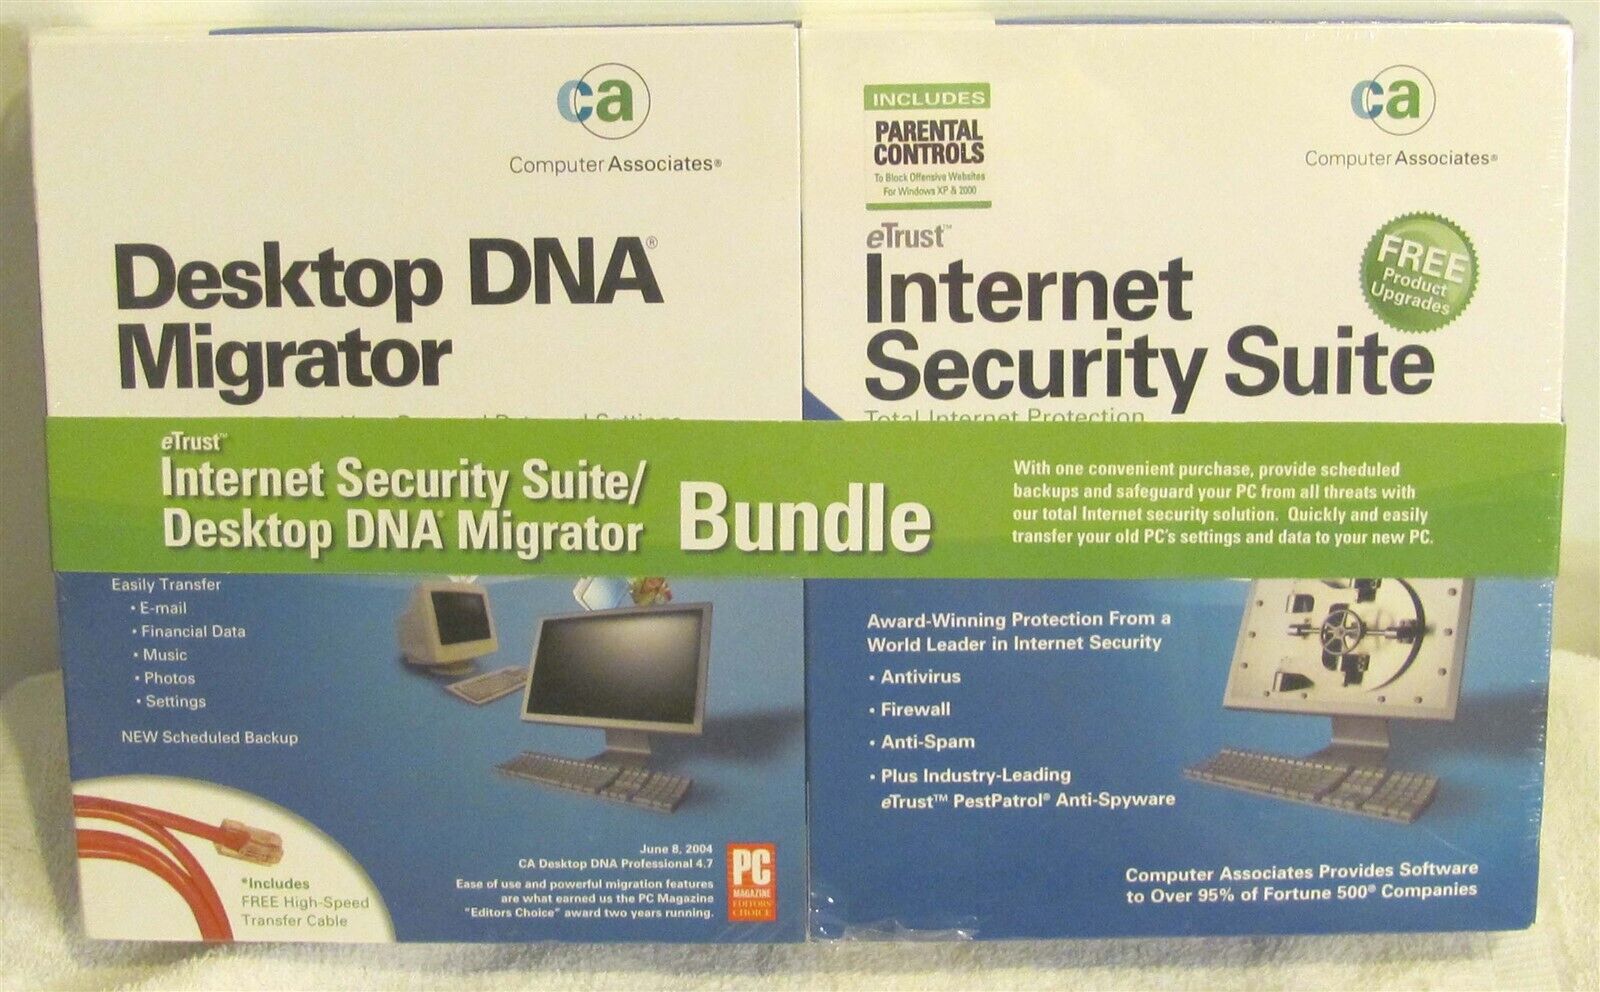 eTrust Internet Security Suite & Desktop DNA Migrator Bundle (Discontinued)